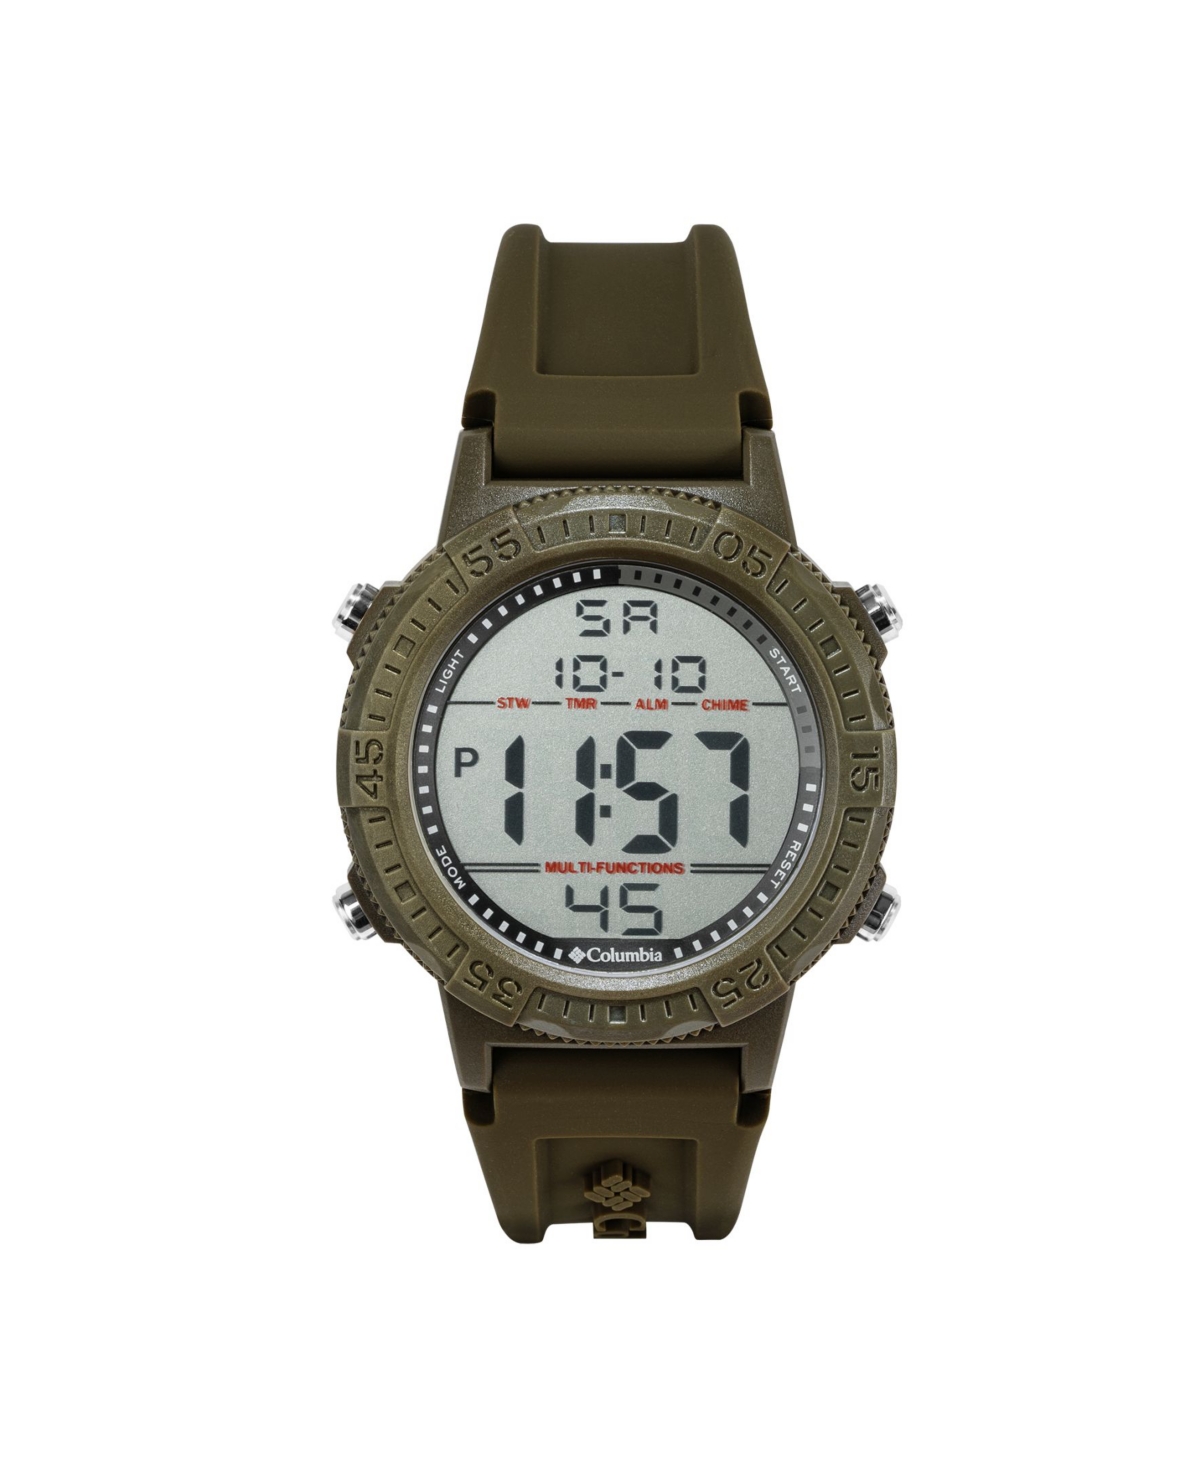 Unisex Peak Patrol Olive Silicone Strap Digital Watch, 46mm - Green